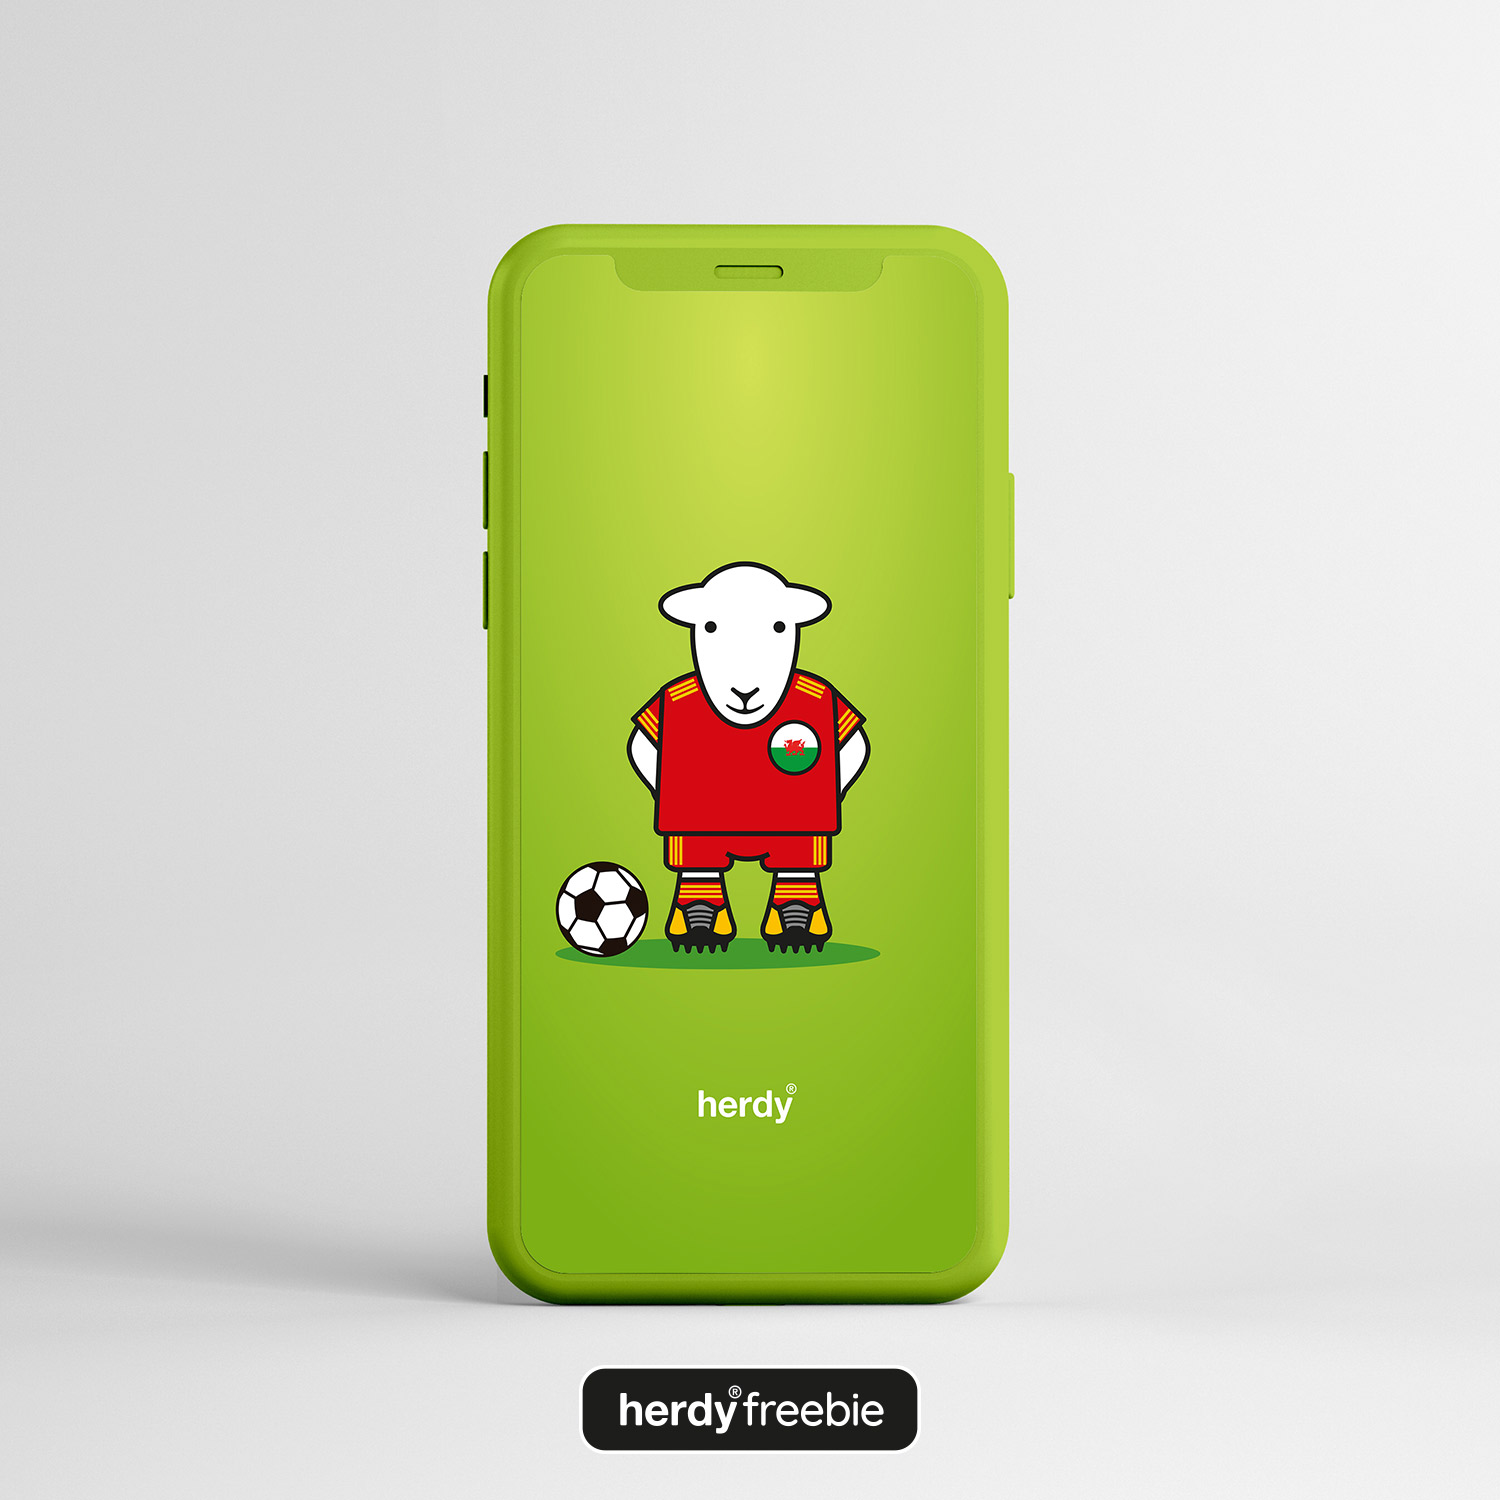 Herdy Freebie, Wales National Football Team Mobile Phone Wallpaper